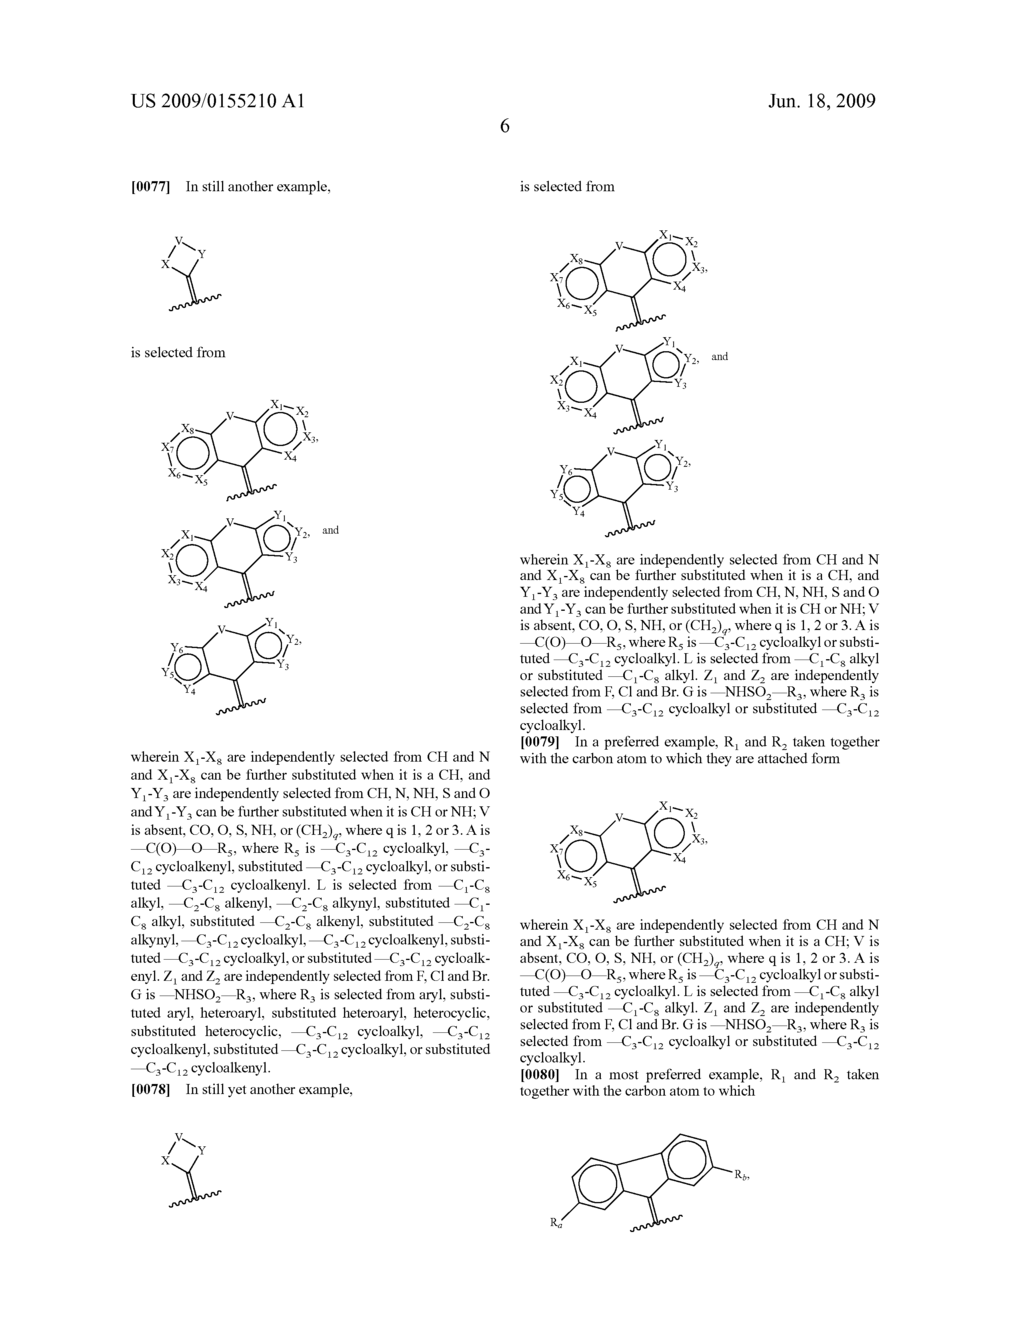 OXIMYL HCV SERINE PROTEASE INHIBITORS - diagram, schematic, and image 07